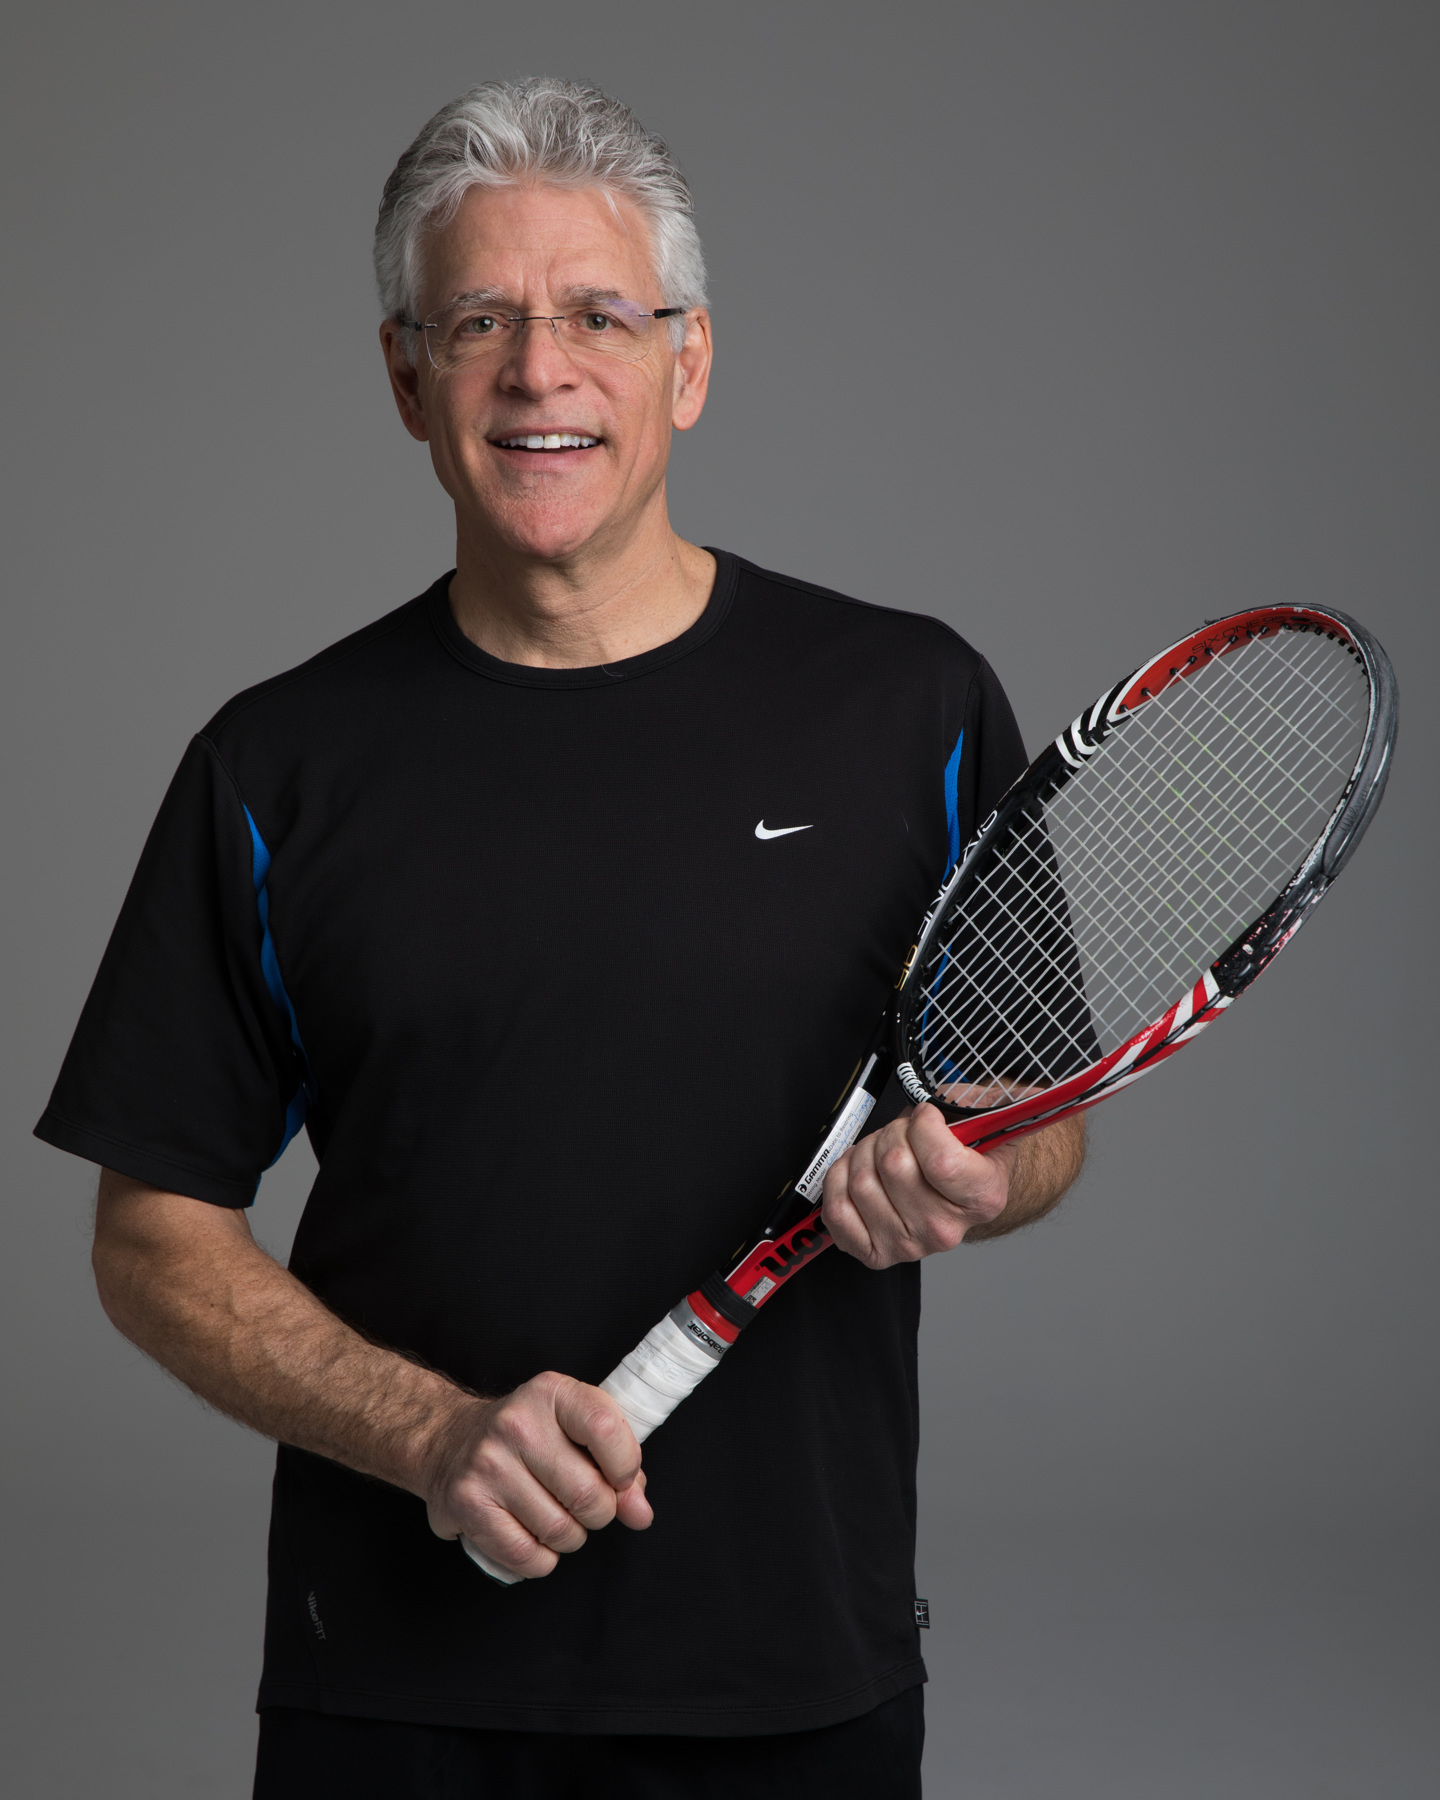 Michael K. teaches tennis lessons in Phialdelphia, PA